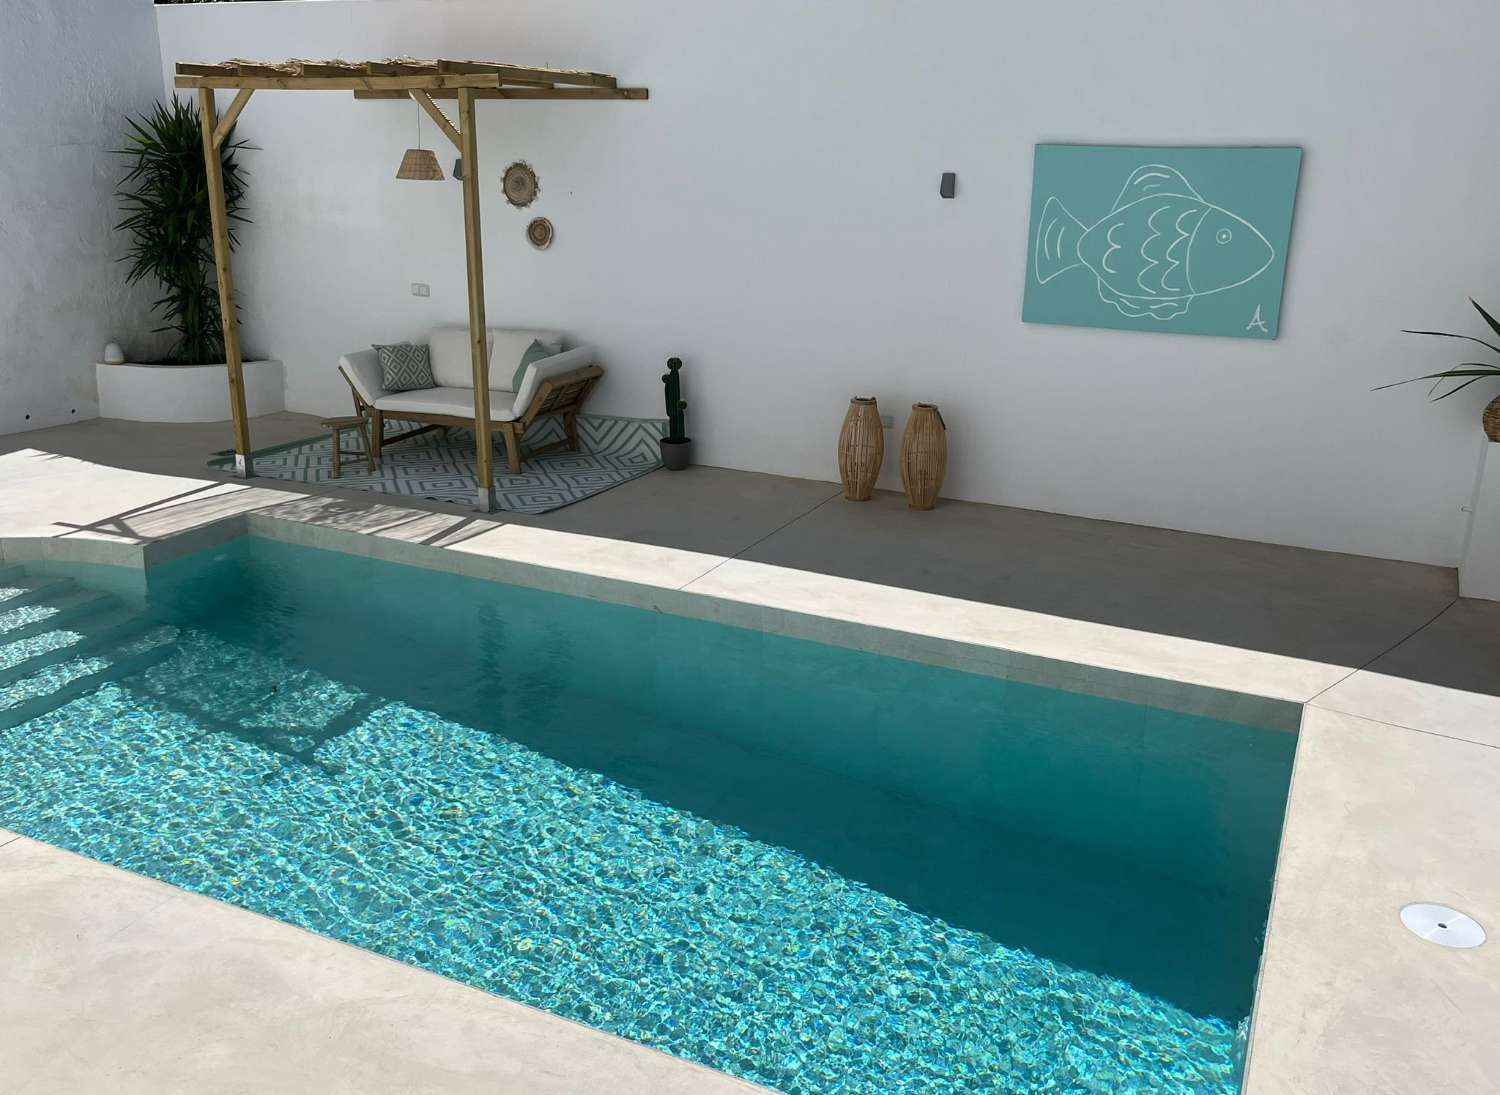 Komplett renovierte Wohnung mit privatem Pool in Frigiliana.